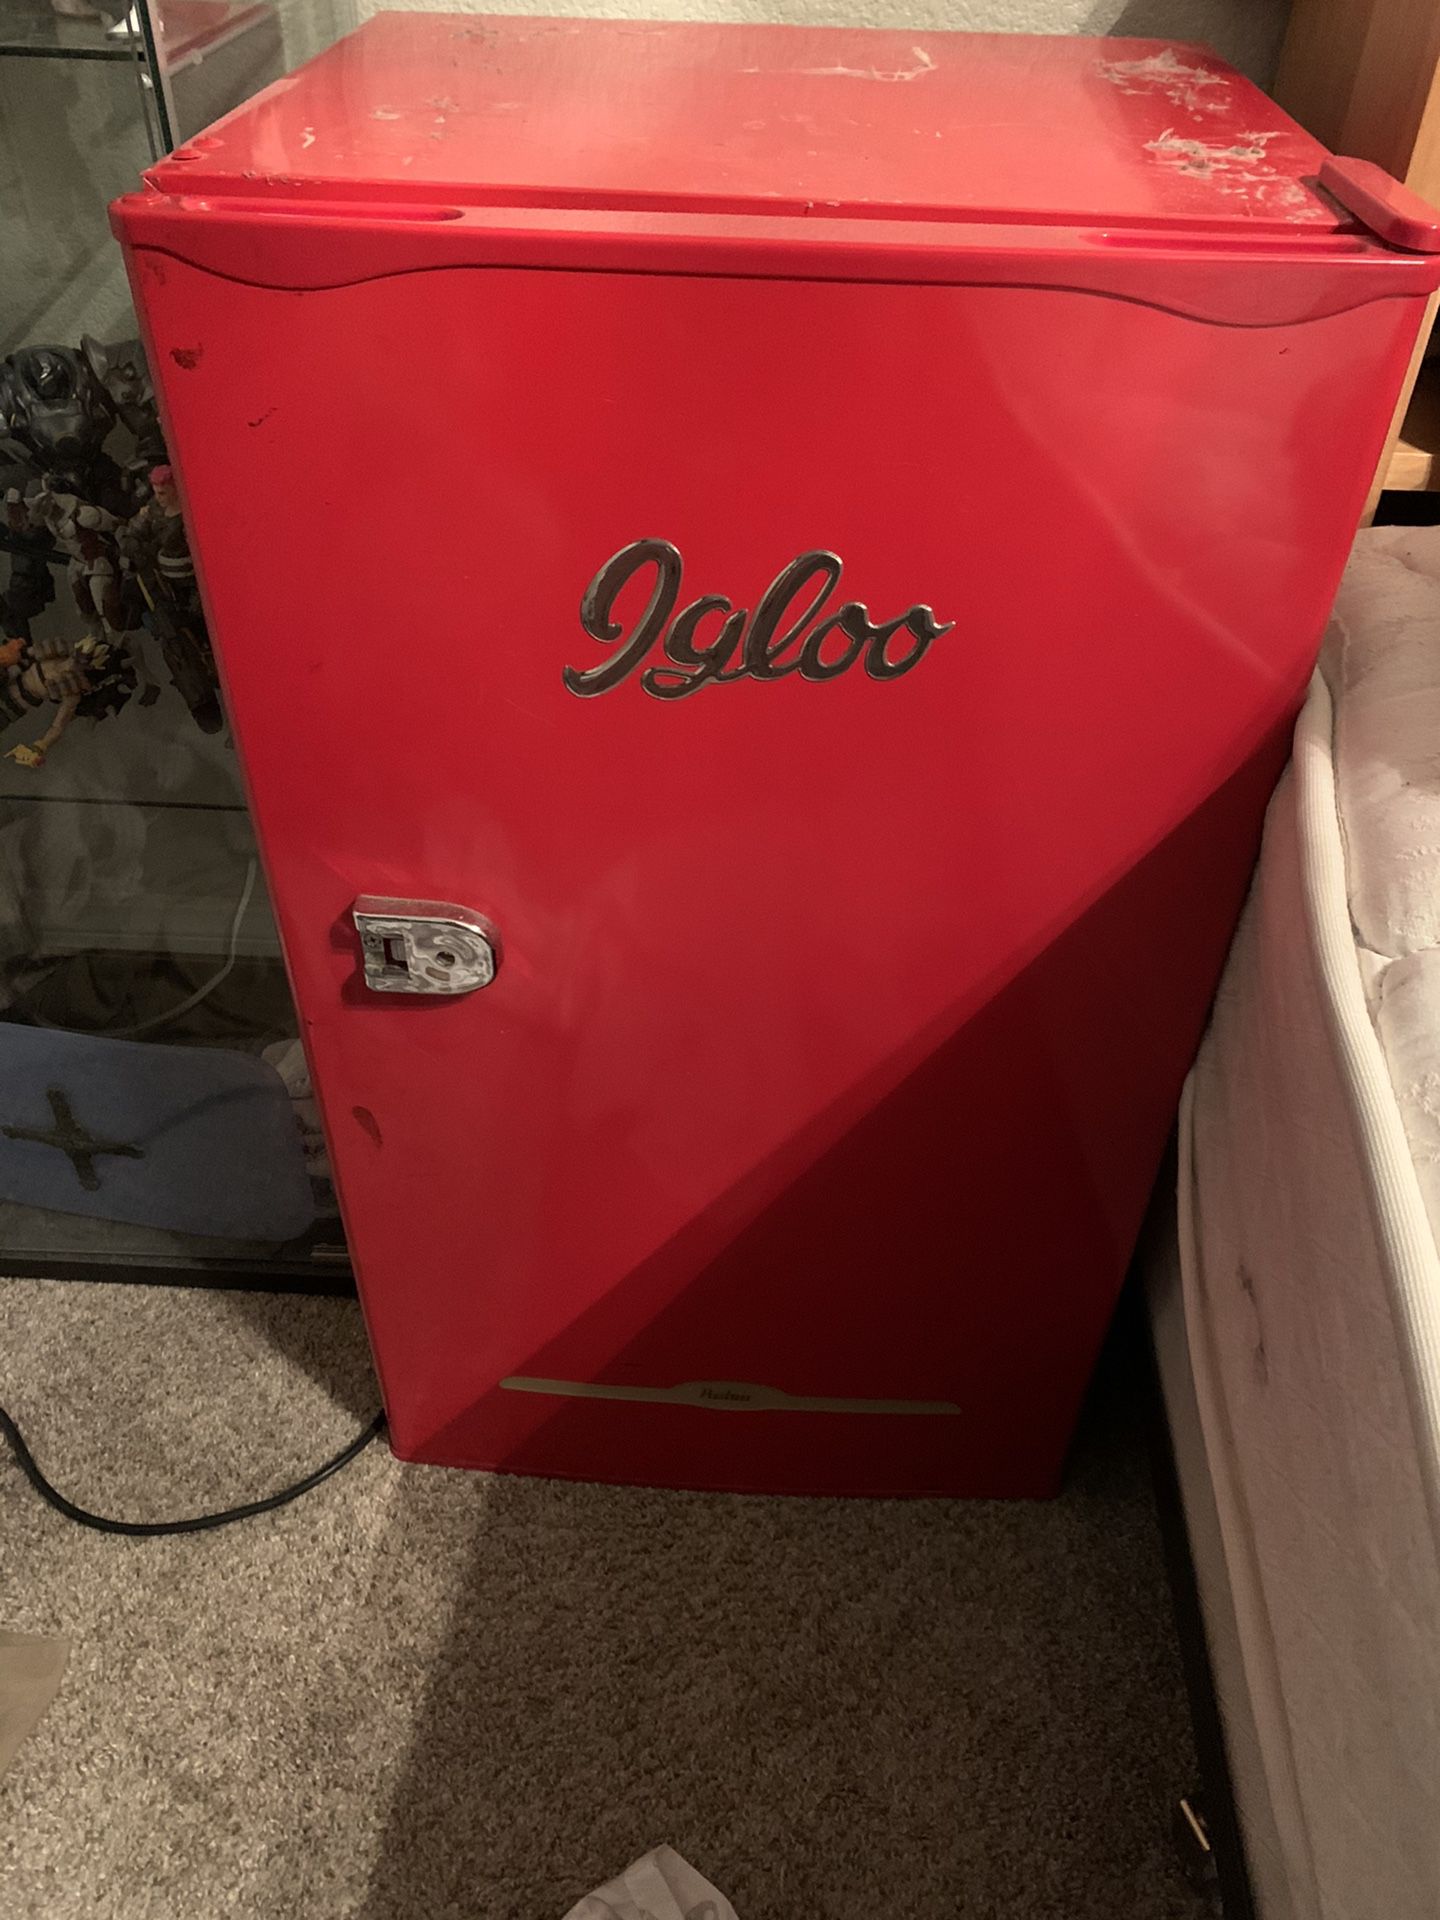 Igloo retro mini refrigerator